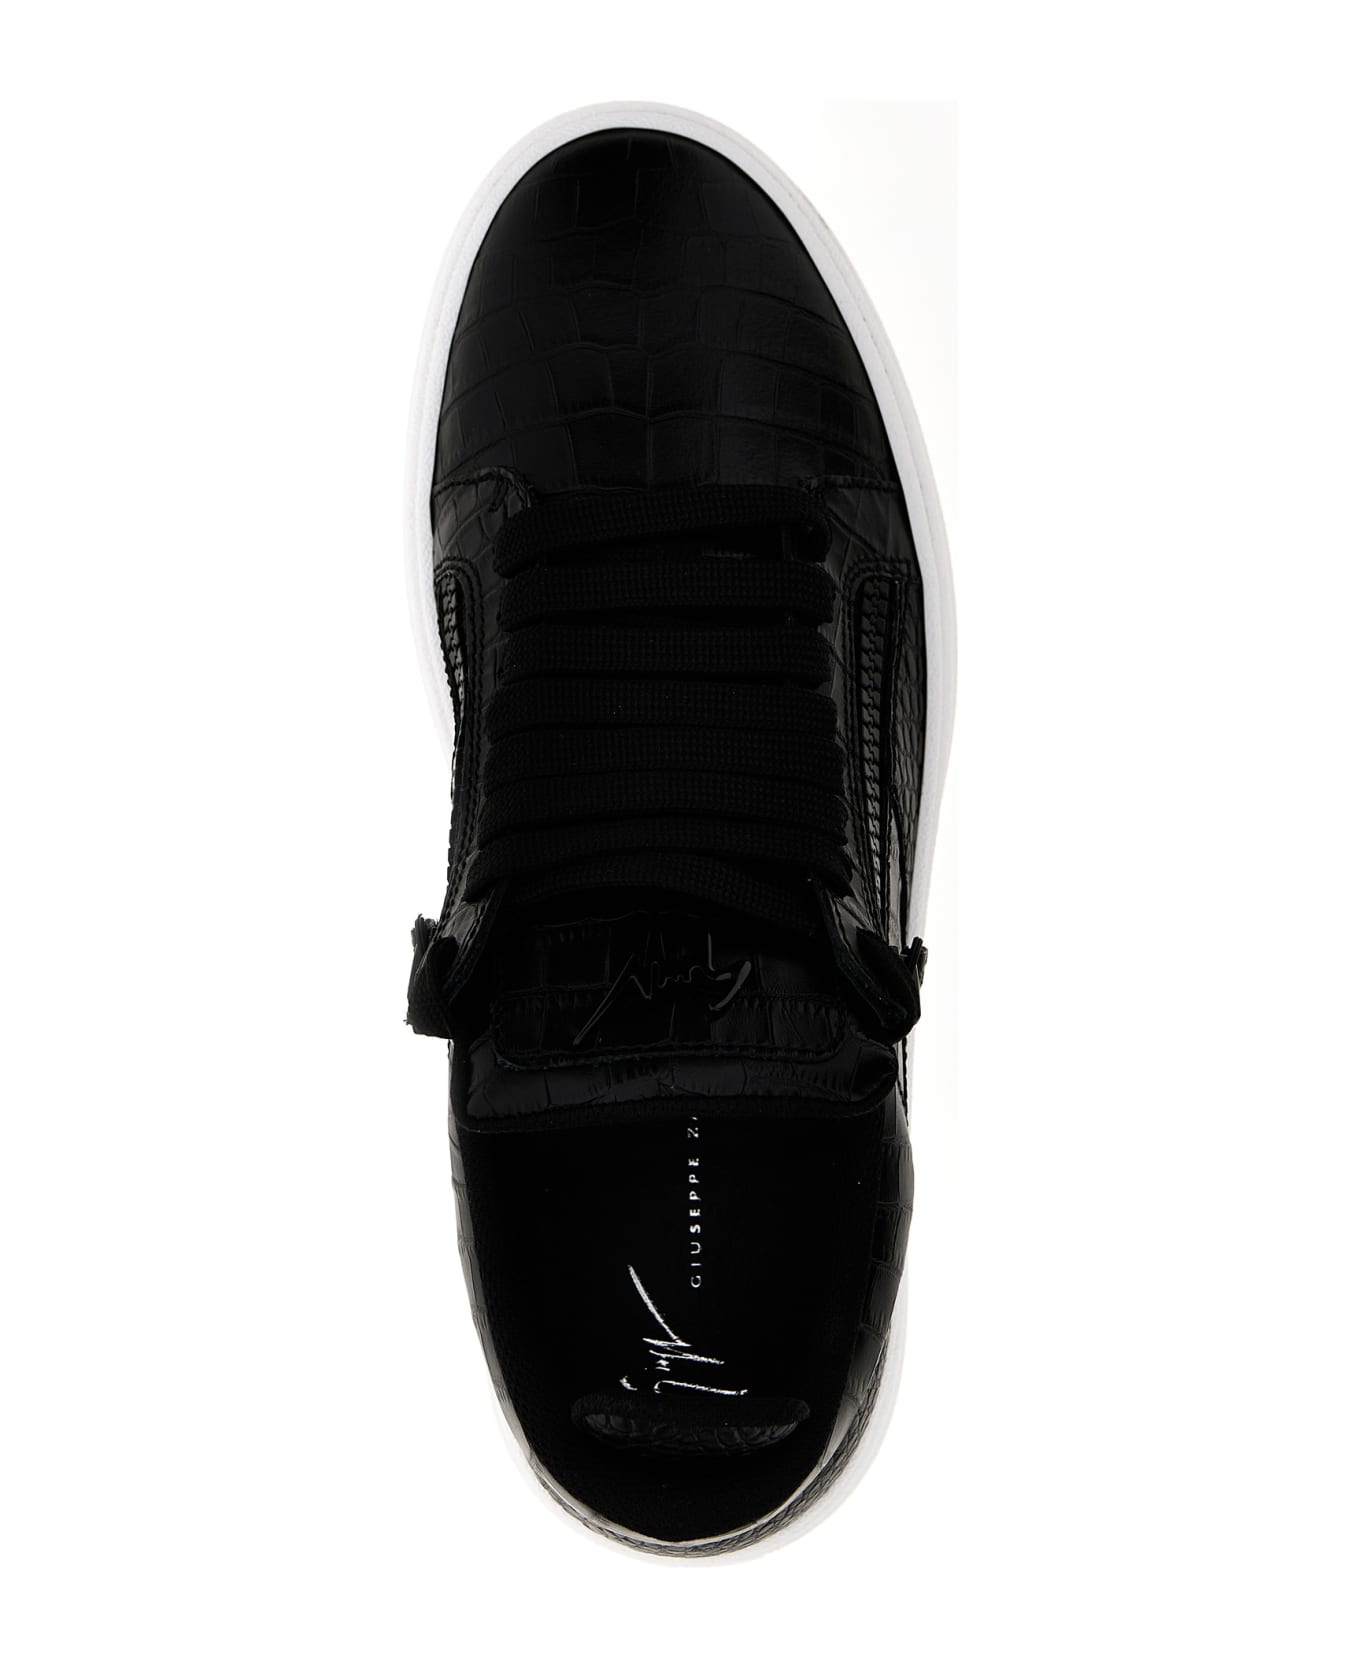 Giuseppe Zanotti Gz94 Sneakers - White/Black